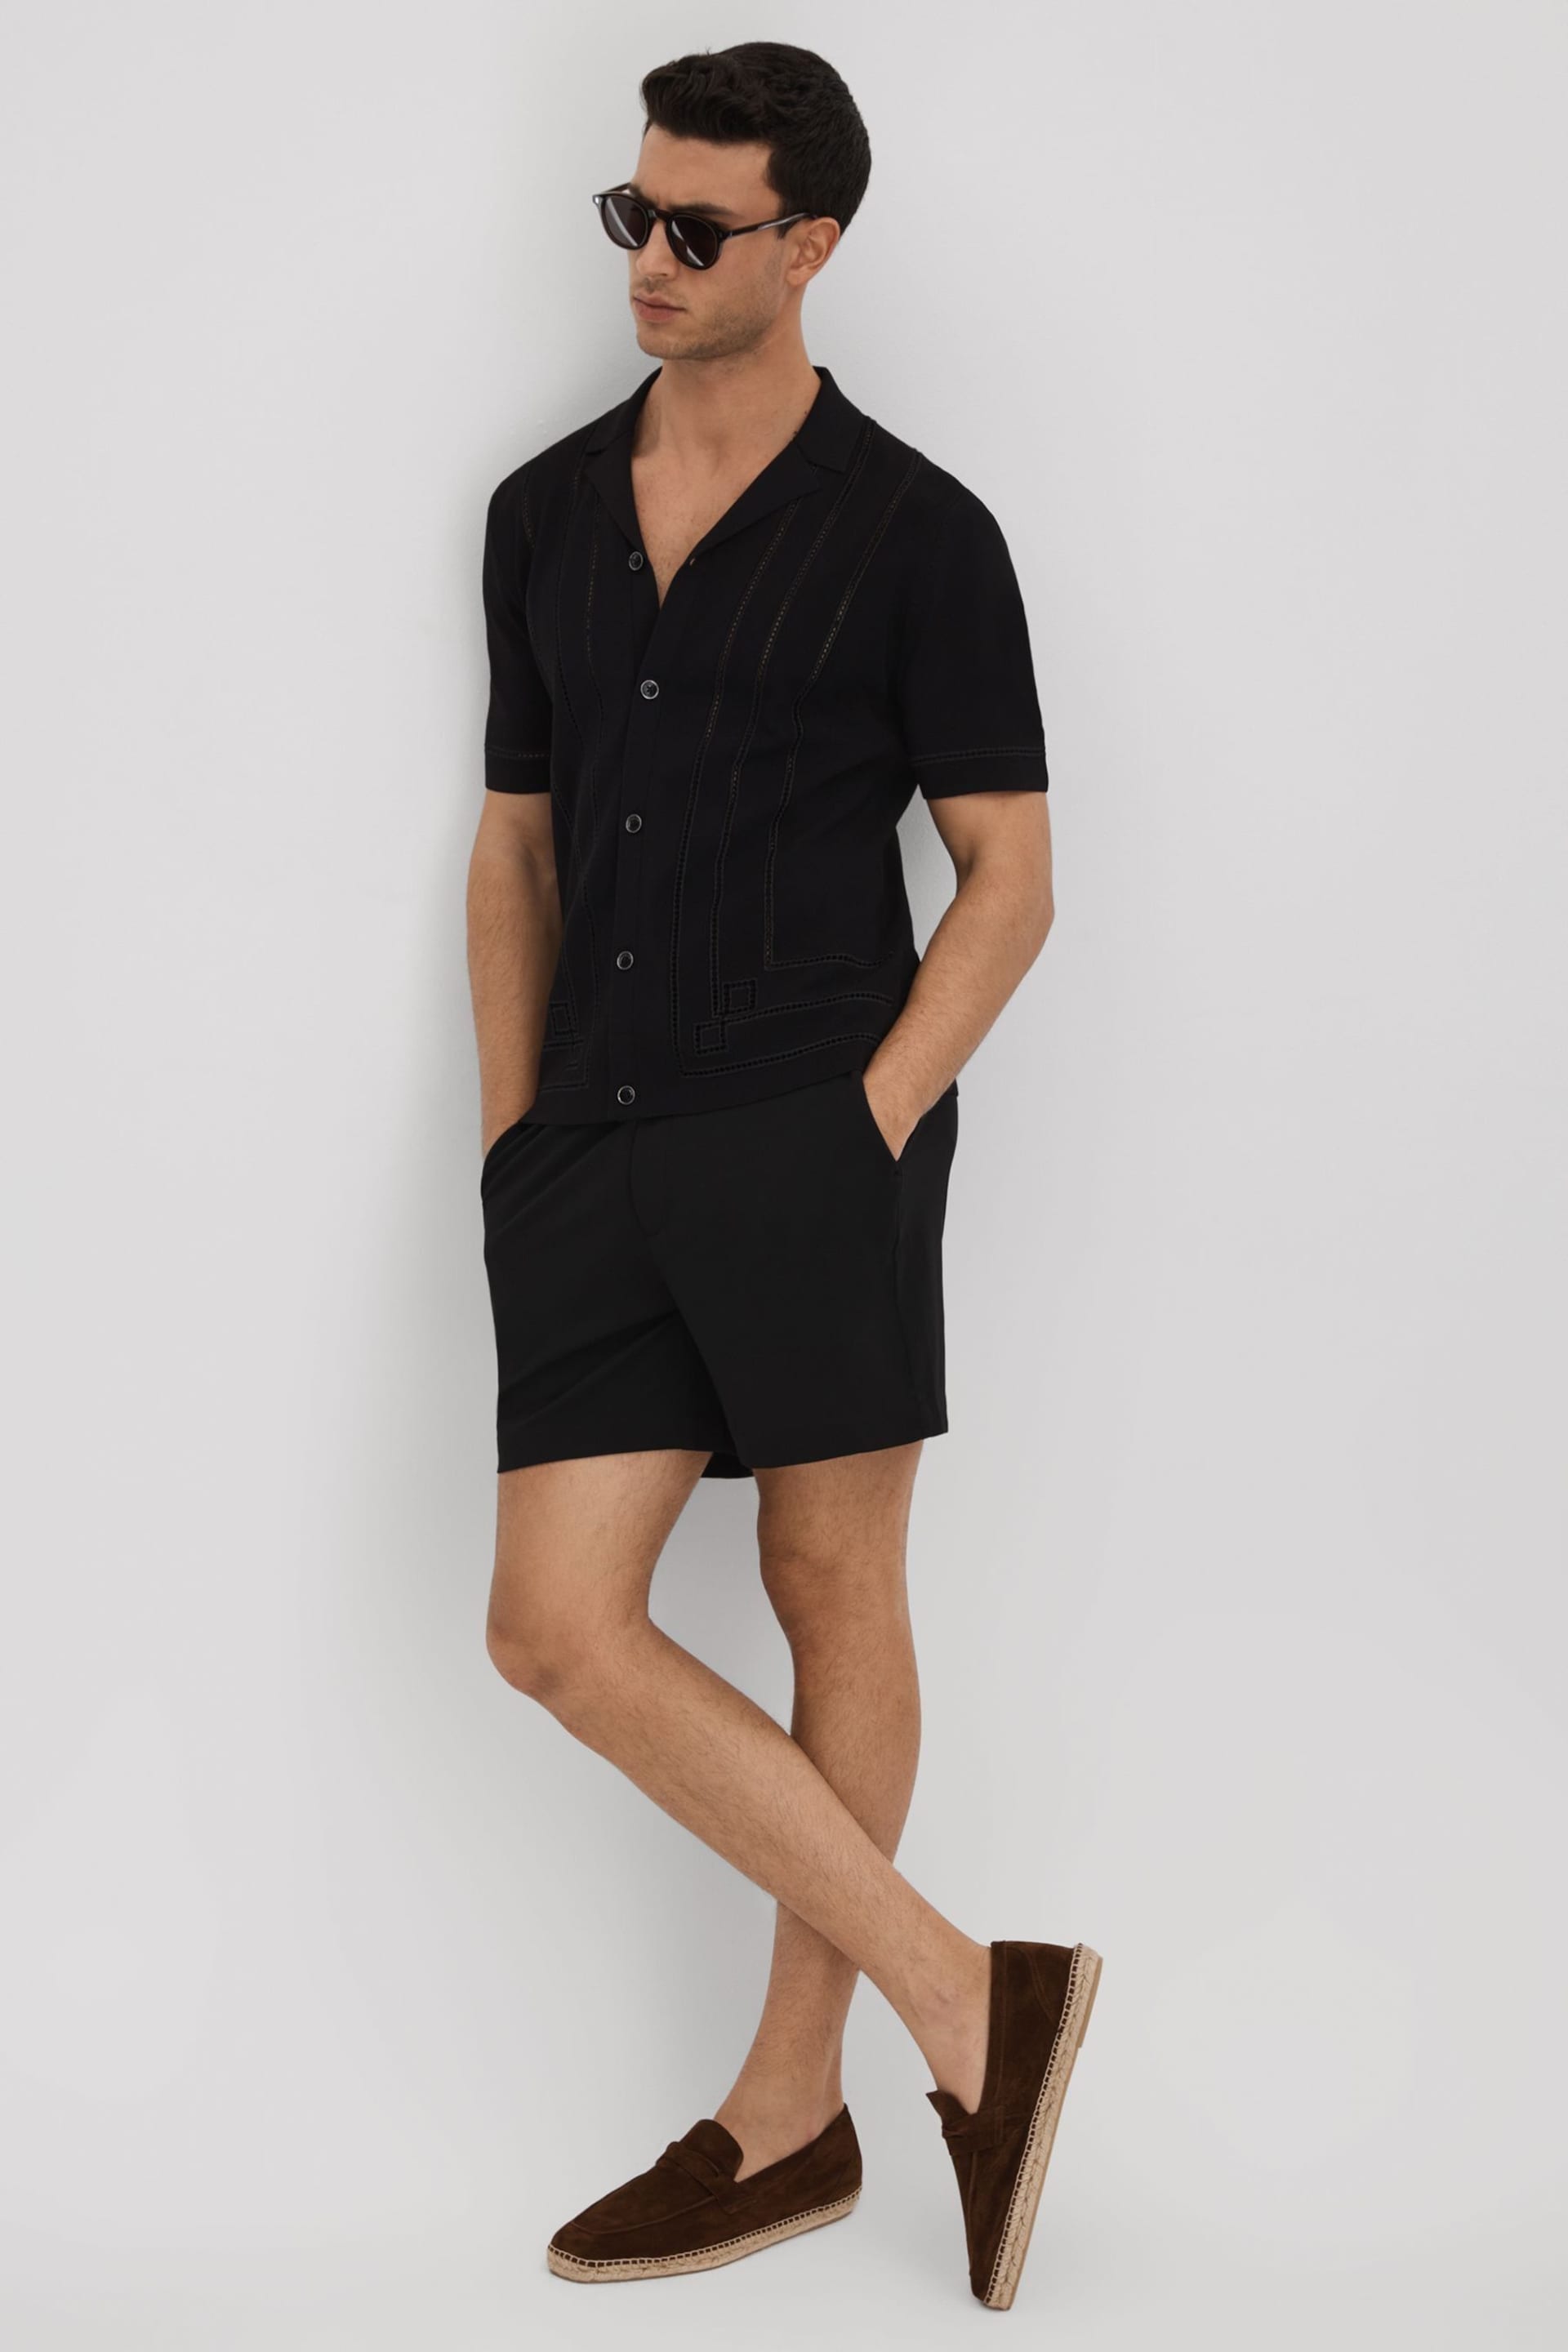 Reiss Black Newmark Textured Drawstring Shorts - Image 3 of 6